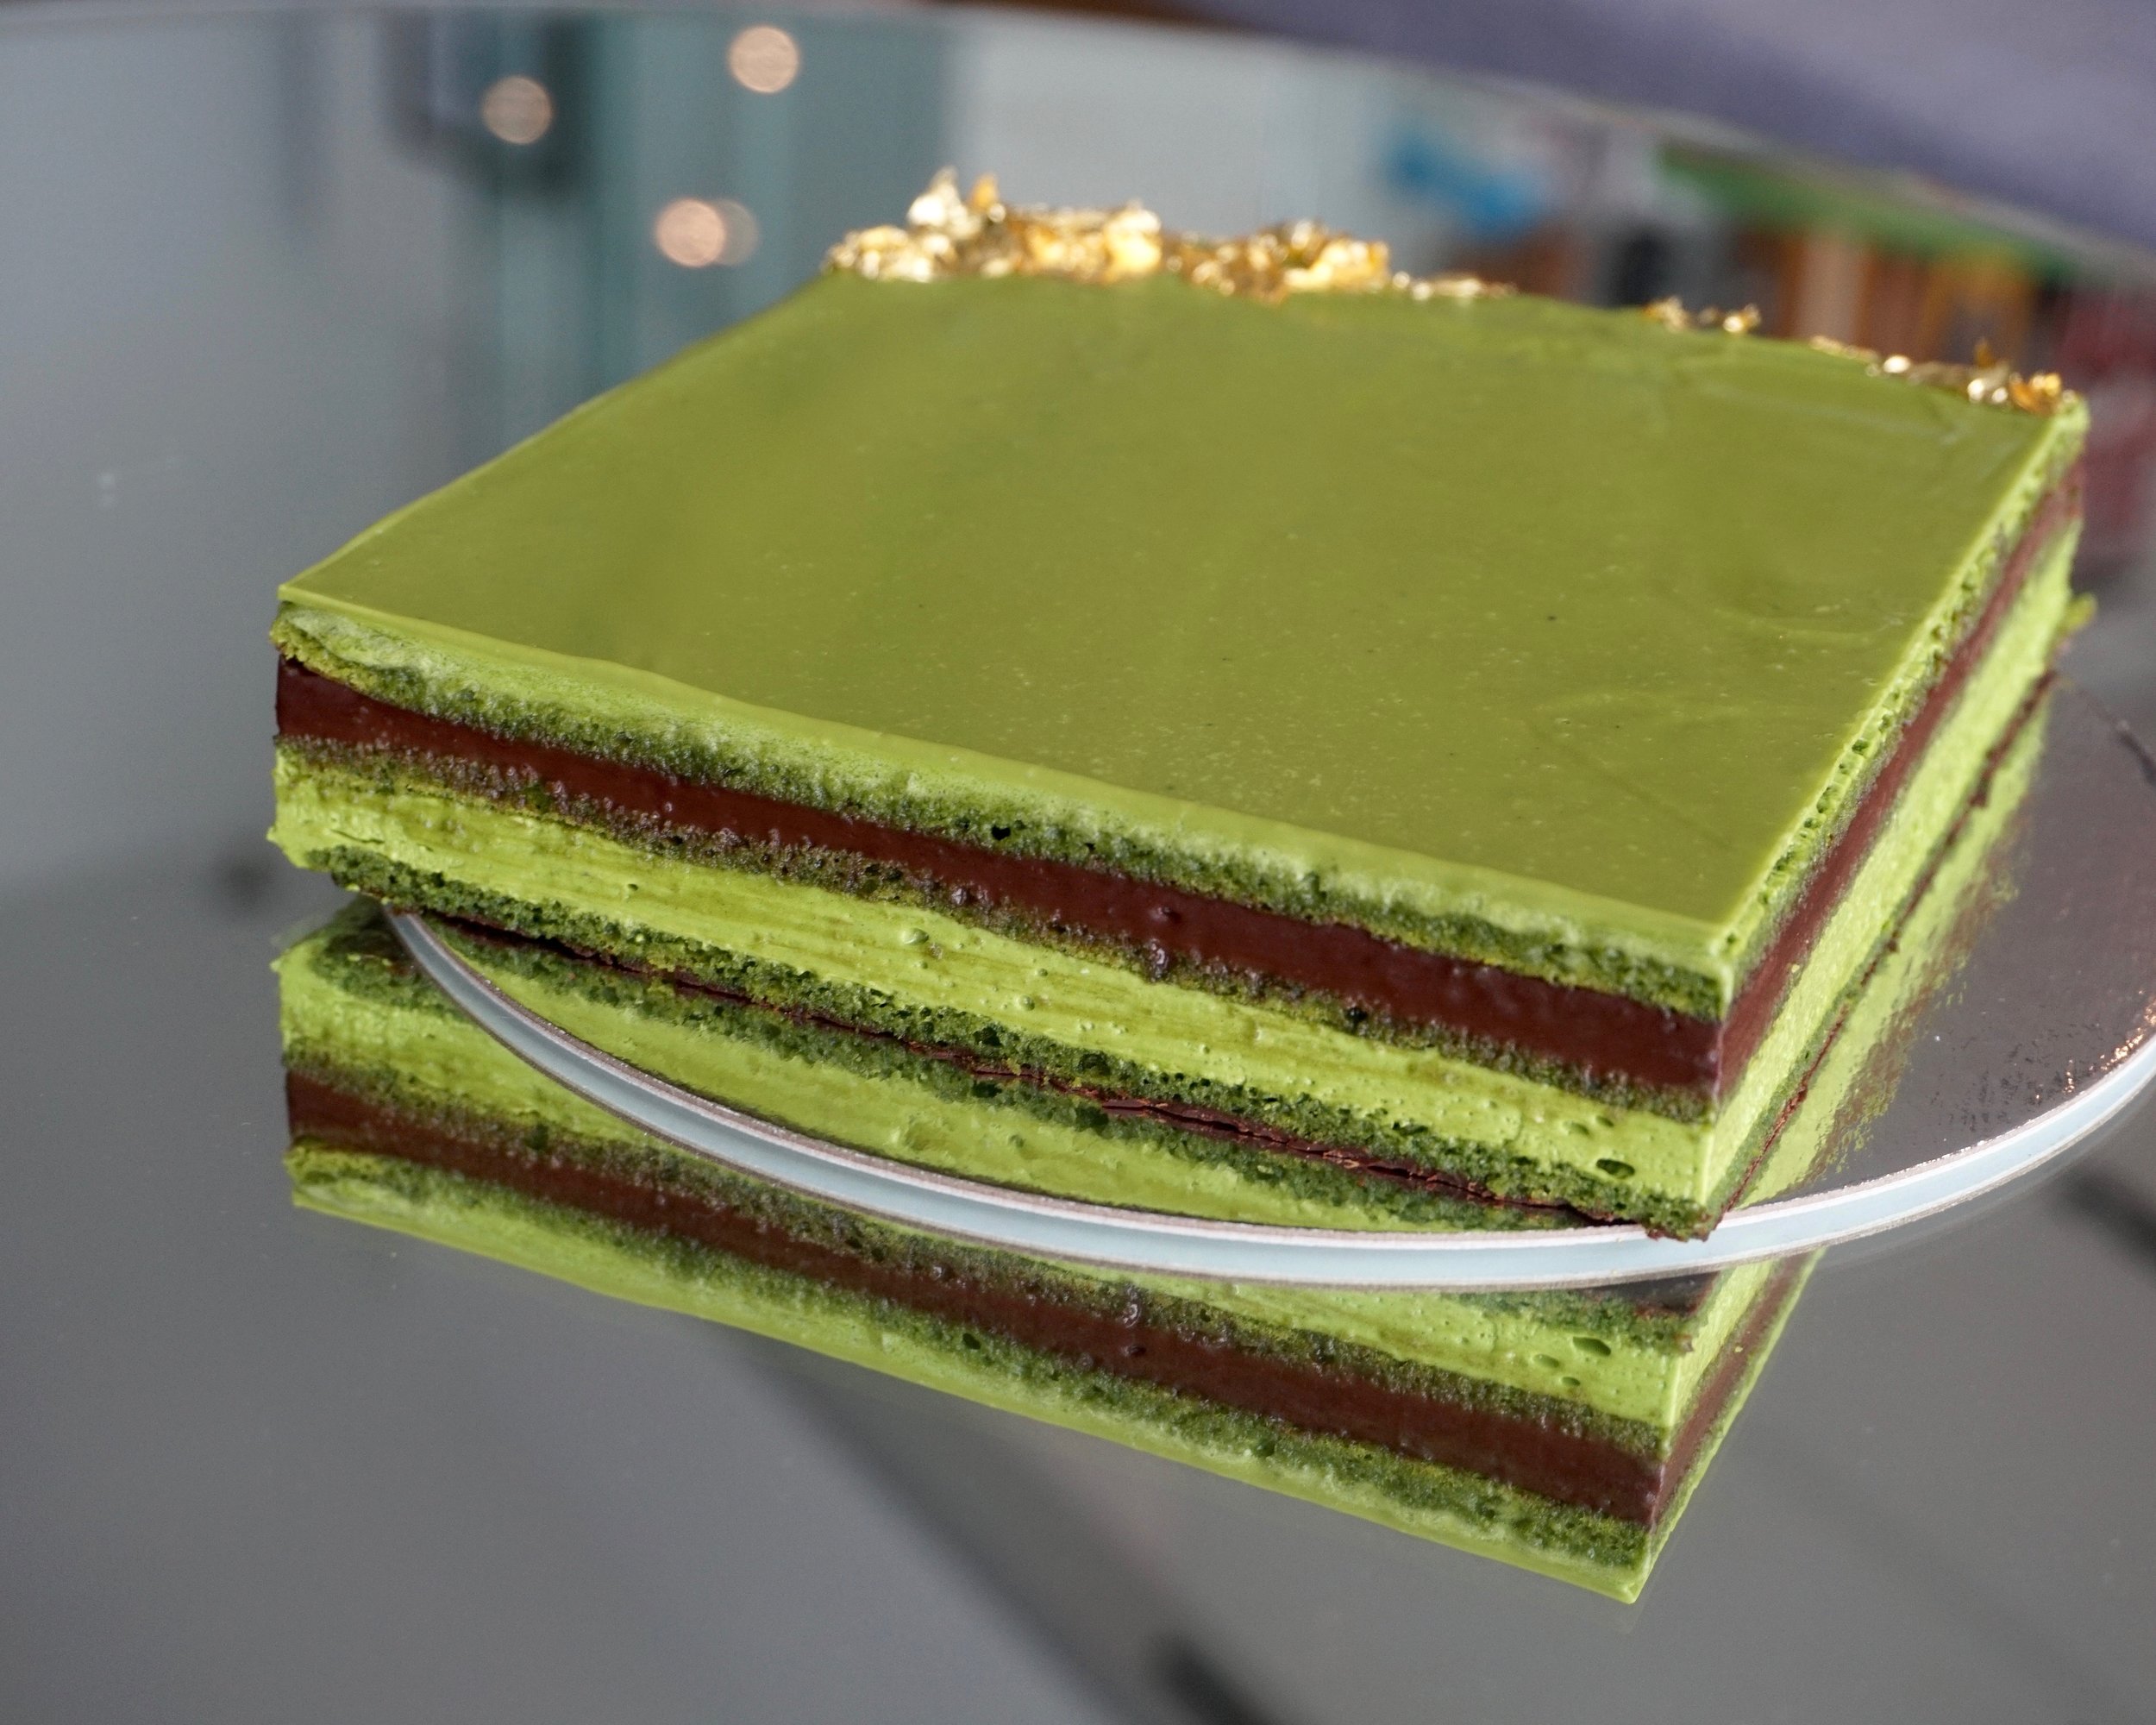 Matcha opera cake made by Gusta Cooking Studio